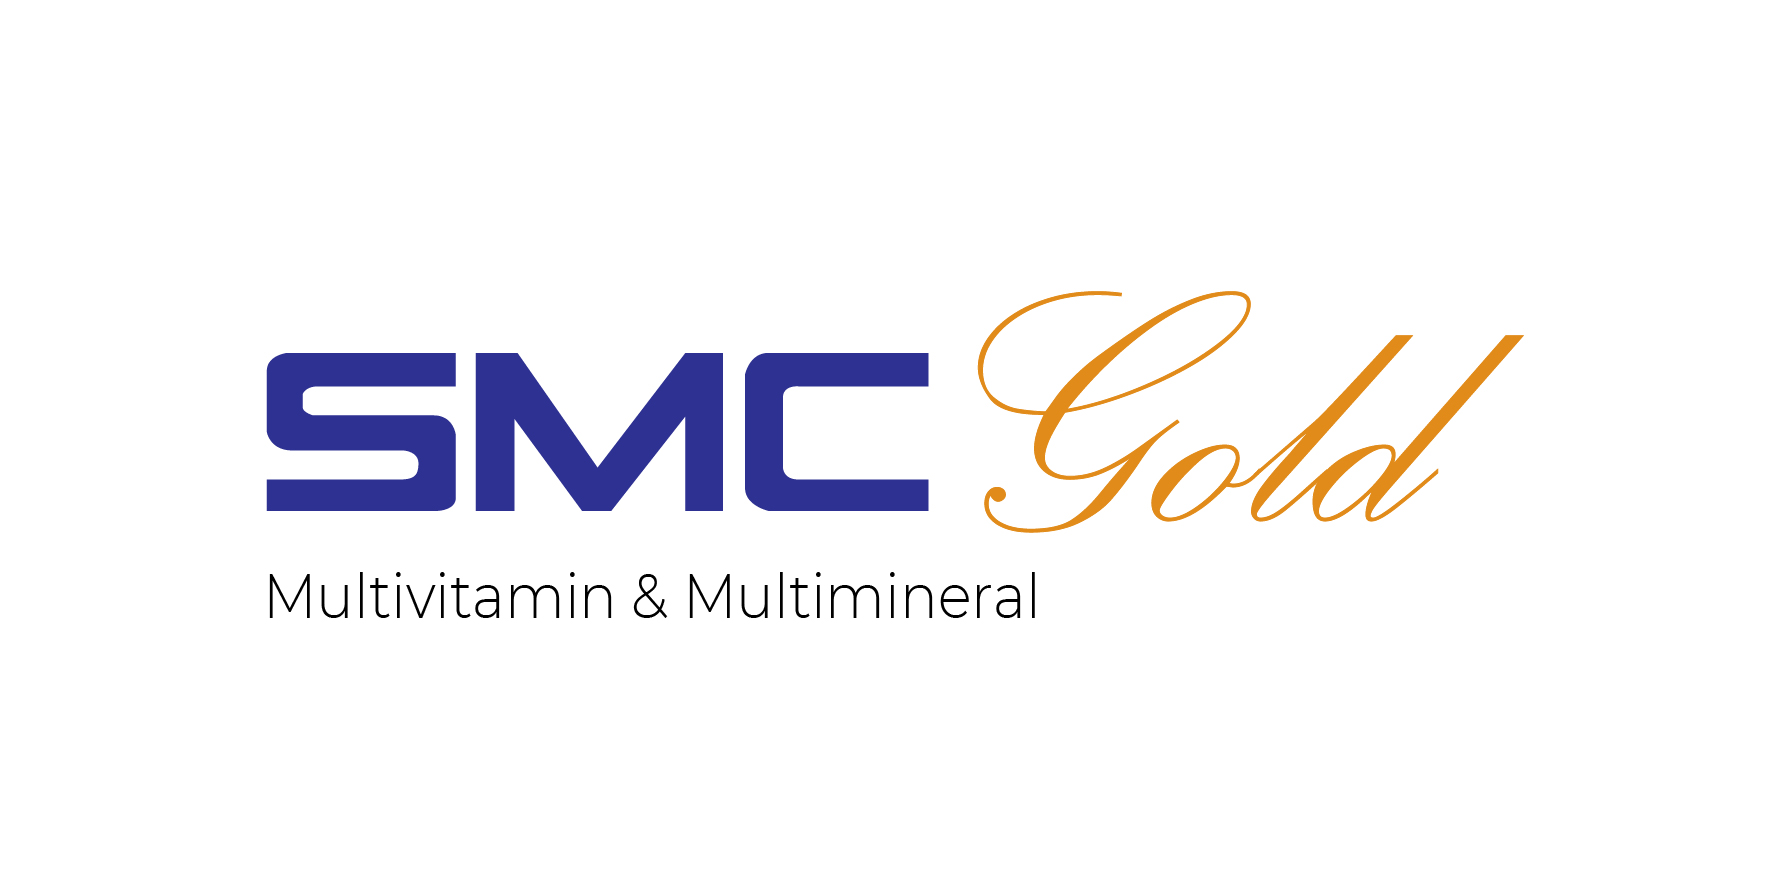 SMC Gold